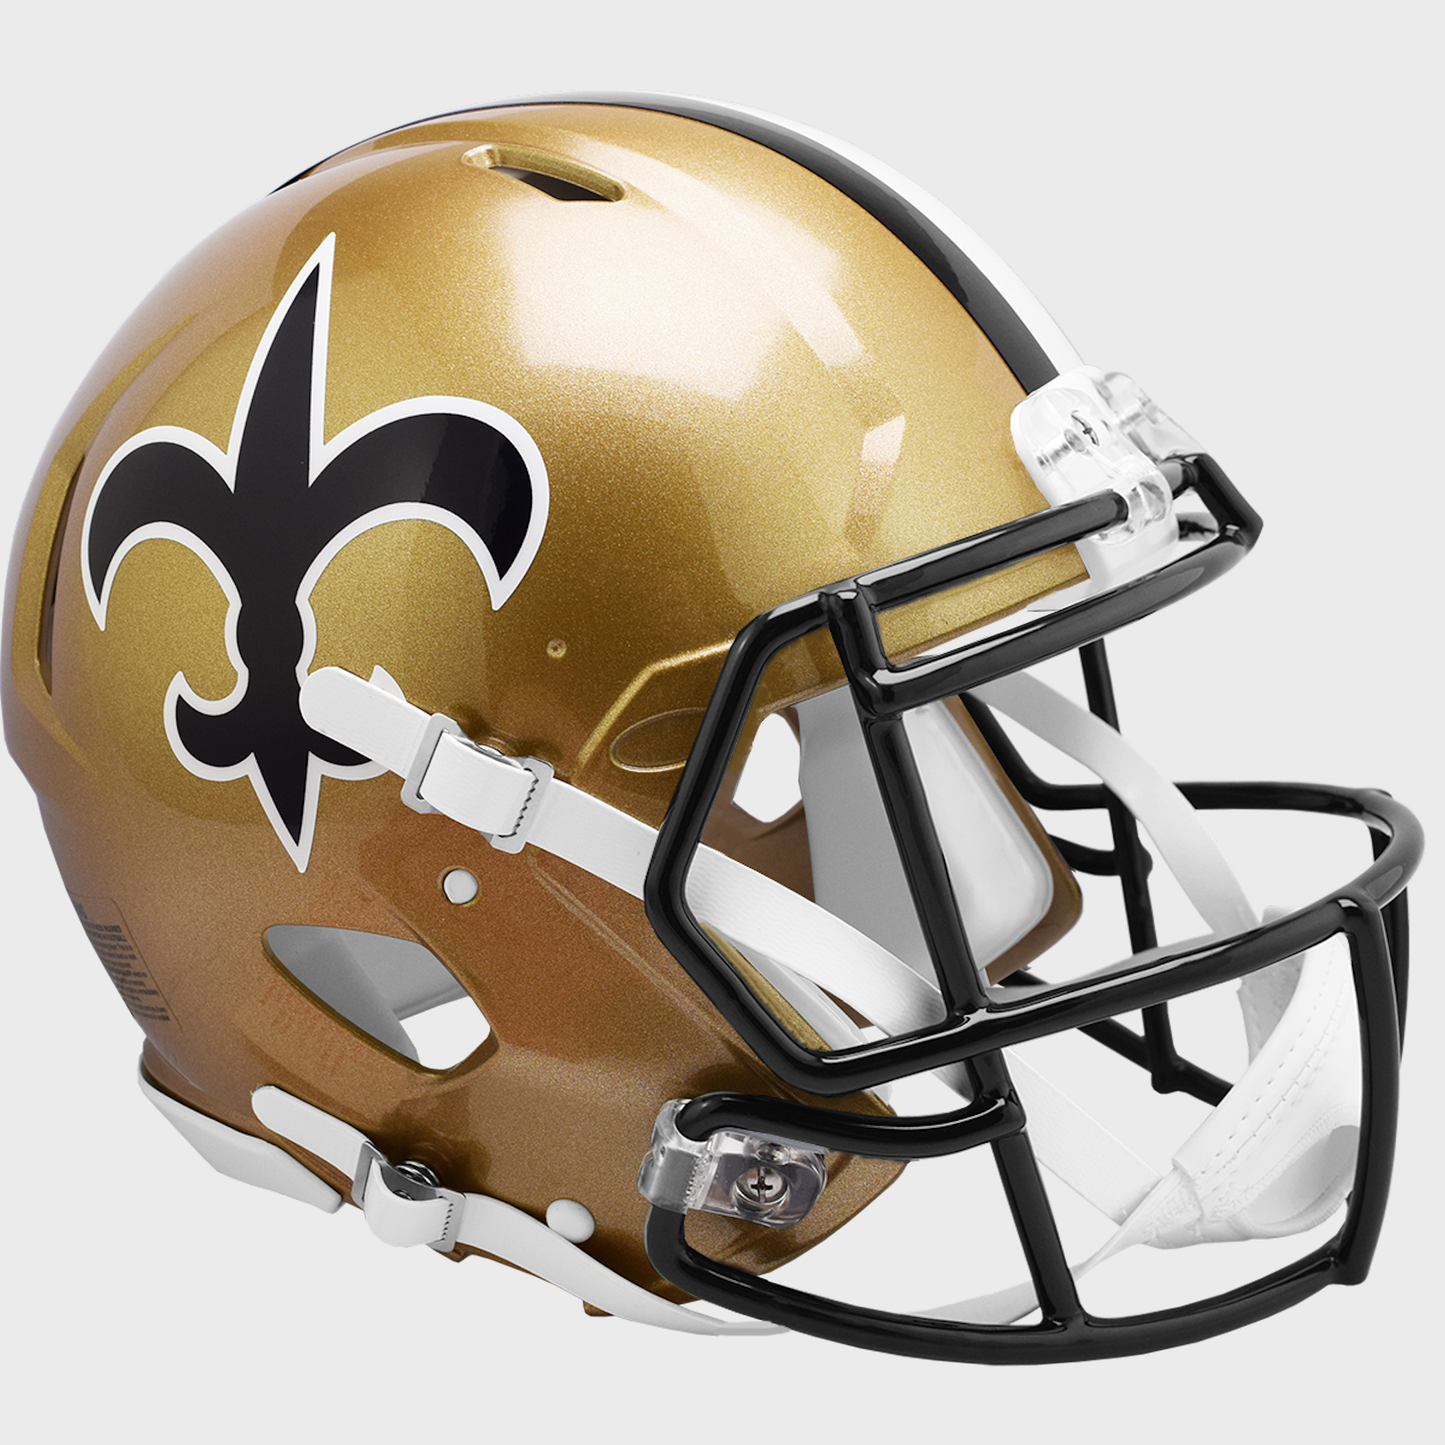 New Orleans Saints authentic full size throwback helmet